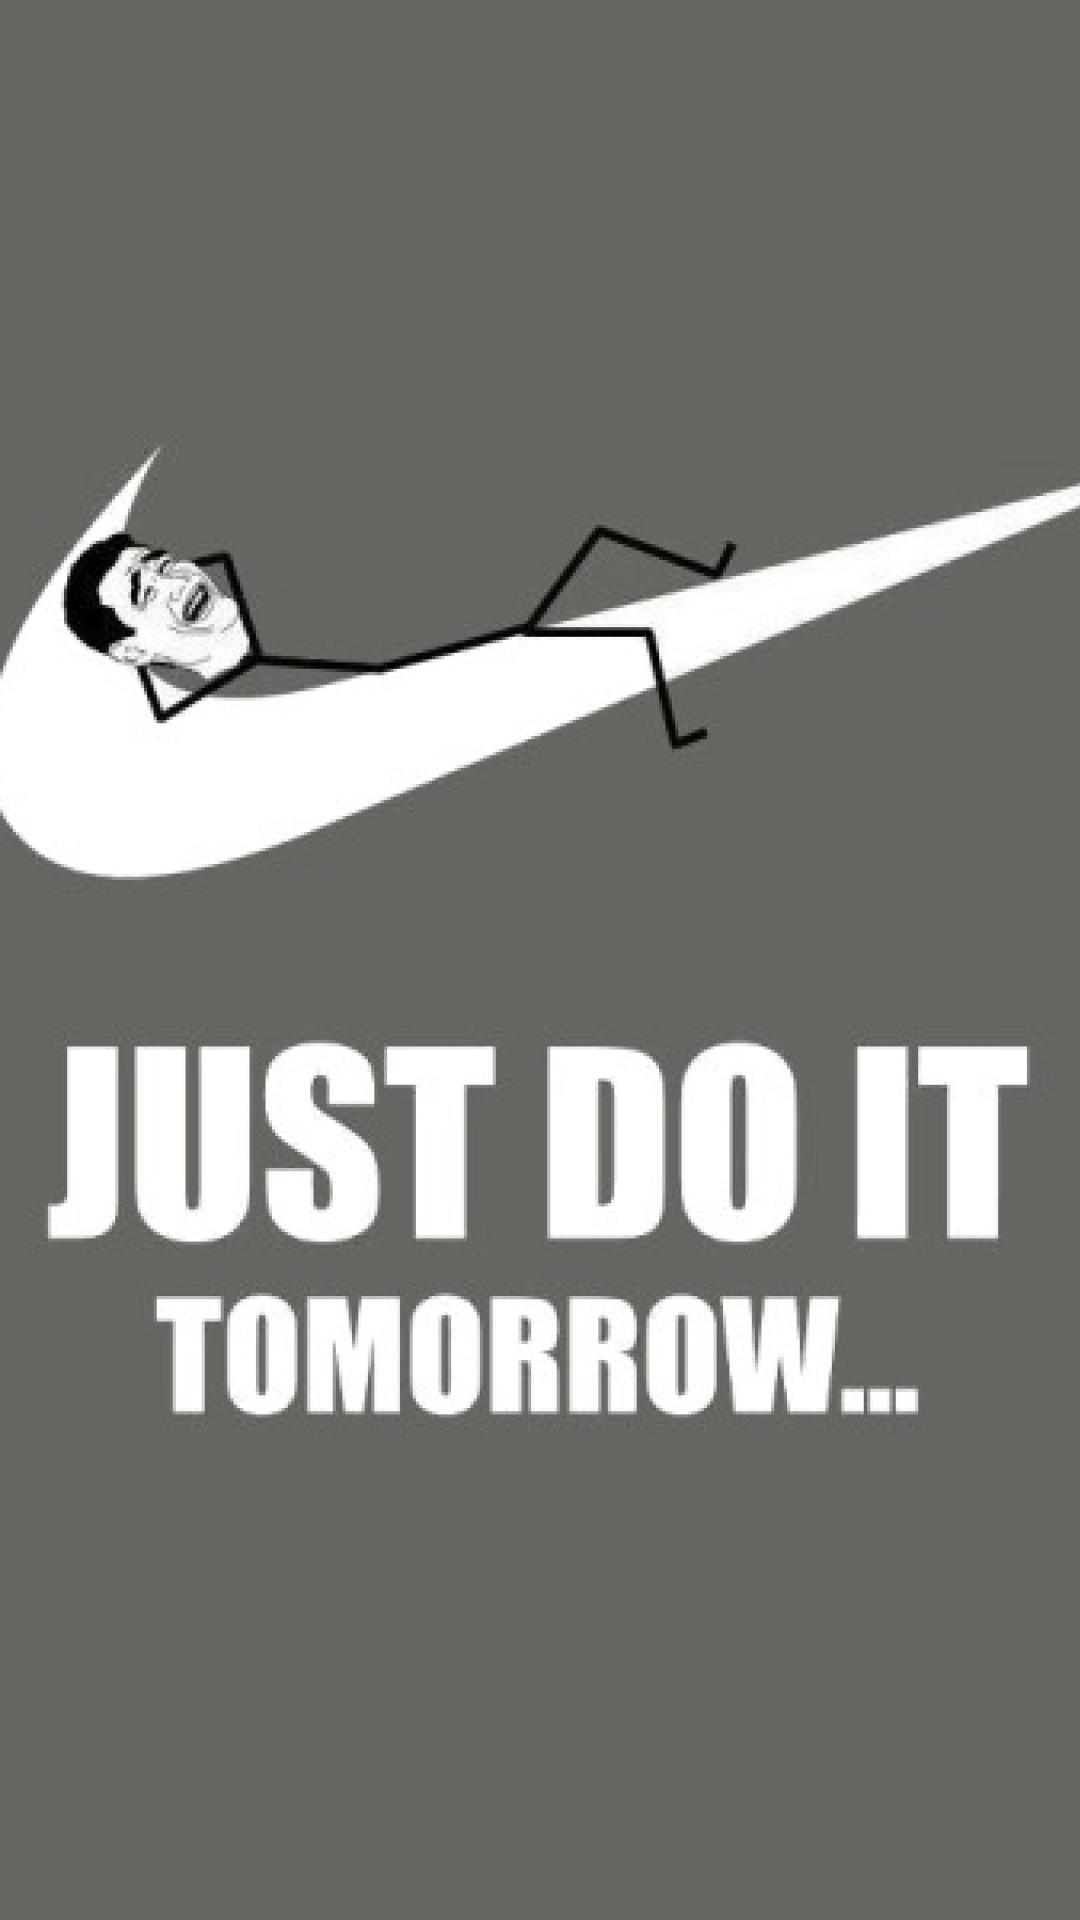 Nike tomorrow yao ming just do it wallpaper 36474